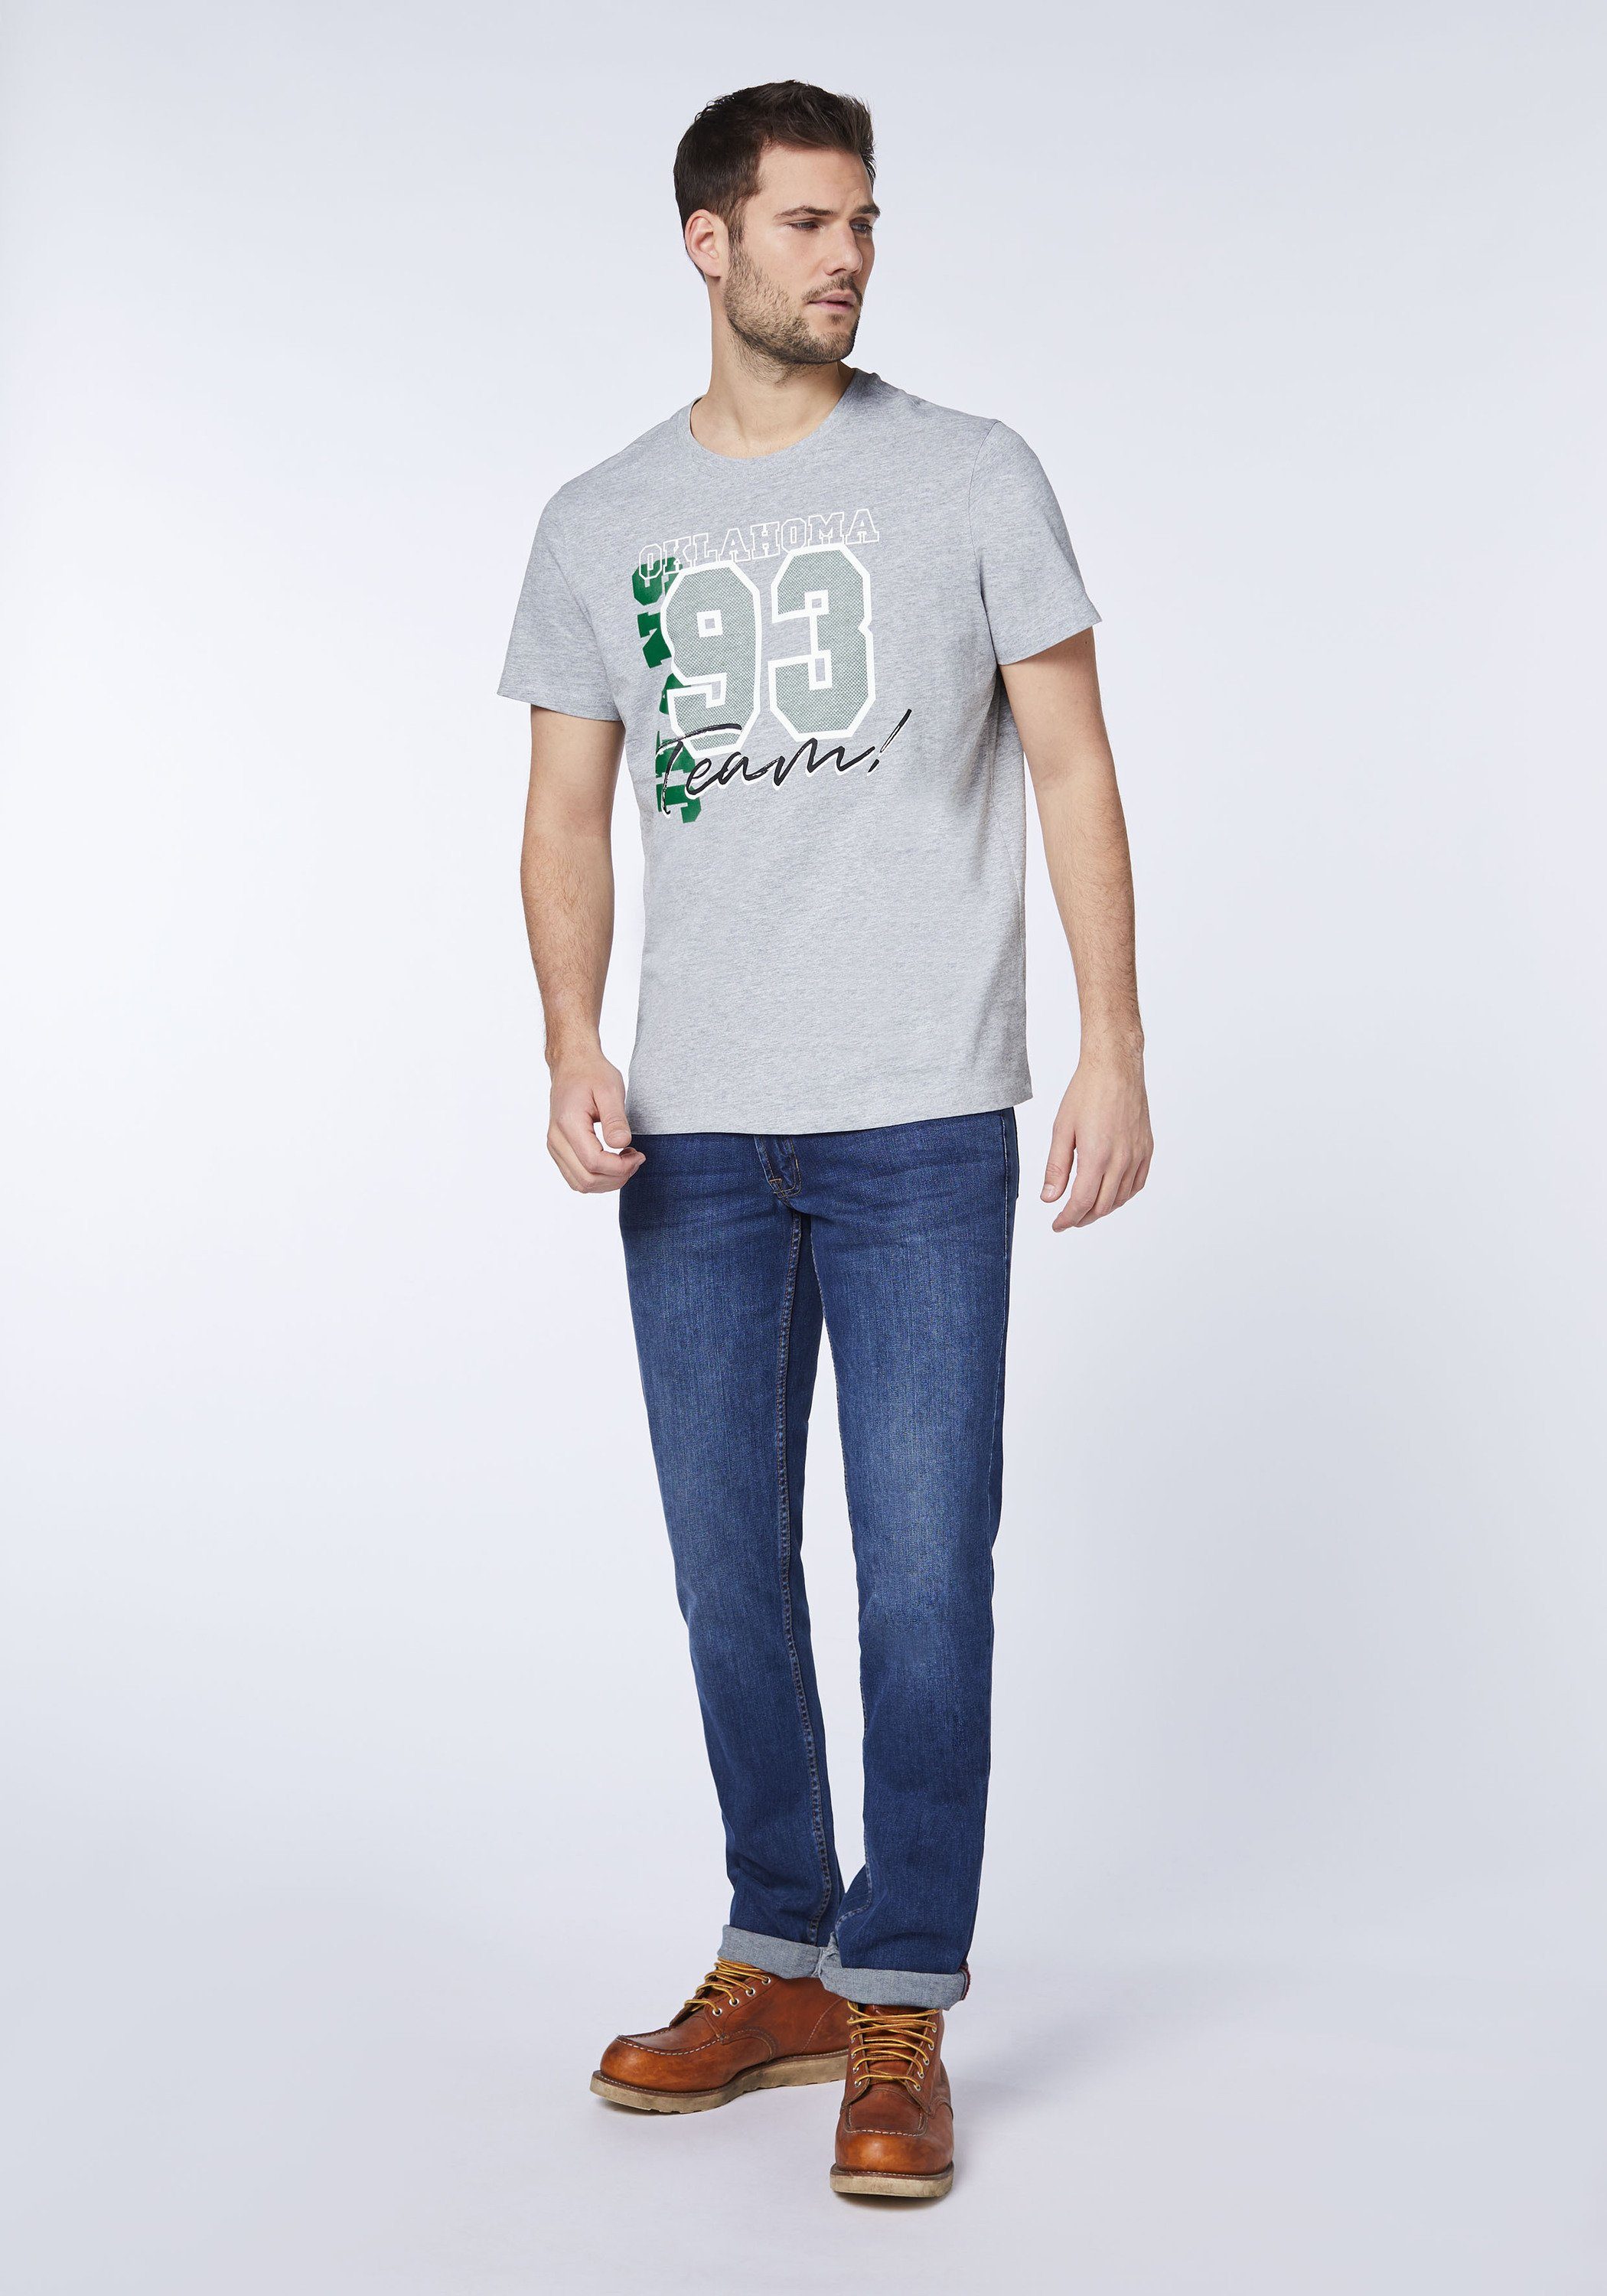 Oklahoma Jeans Print-Shirt im Label-Trikot-Design 17-4402M Neutral Melange Gray